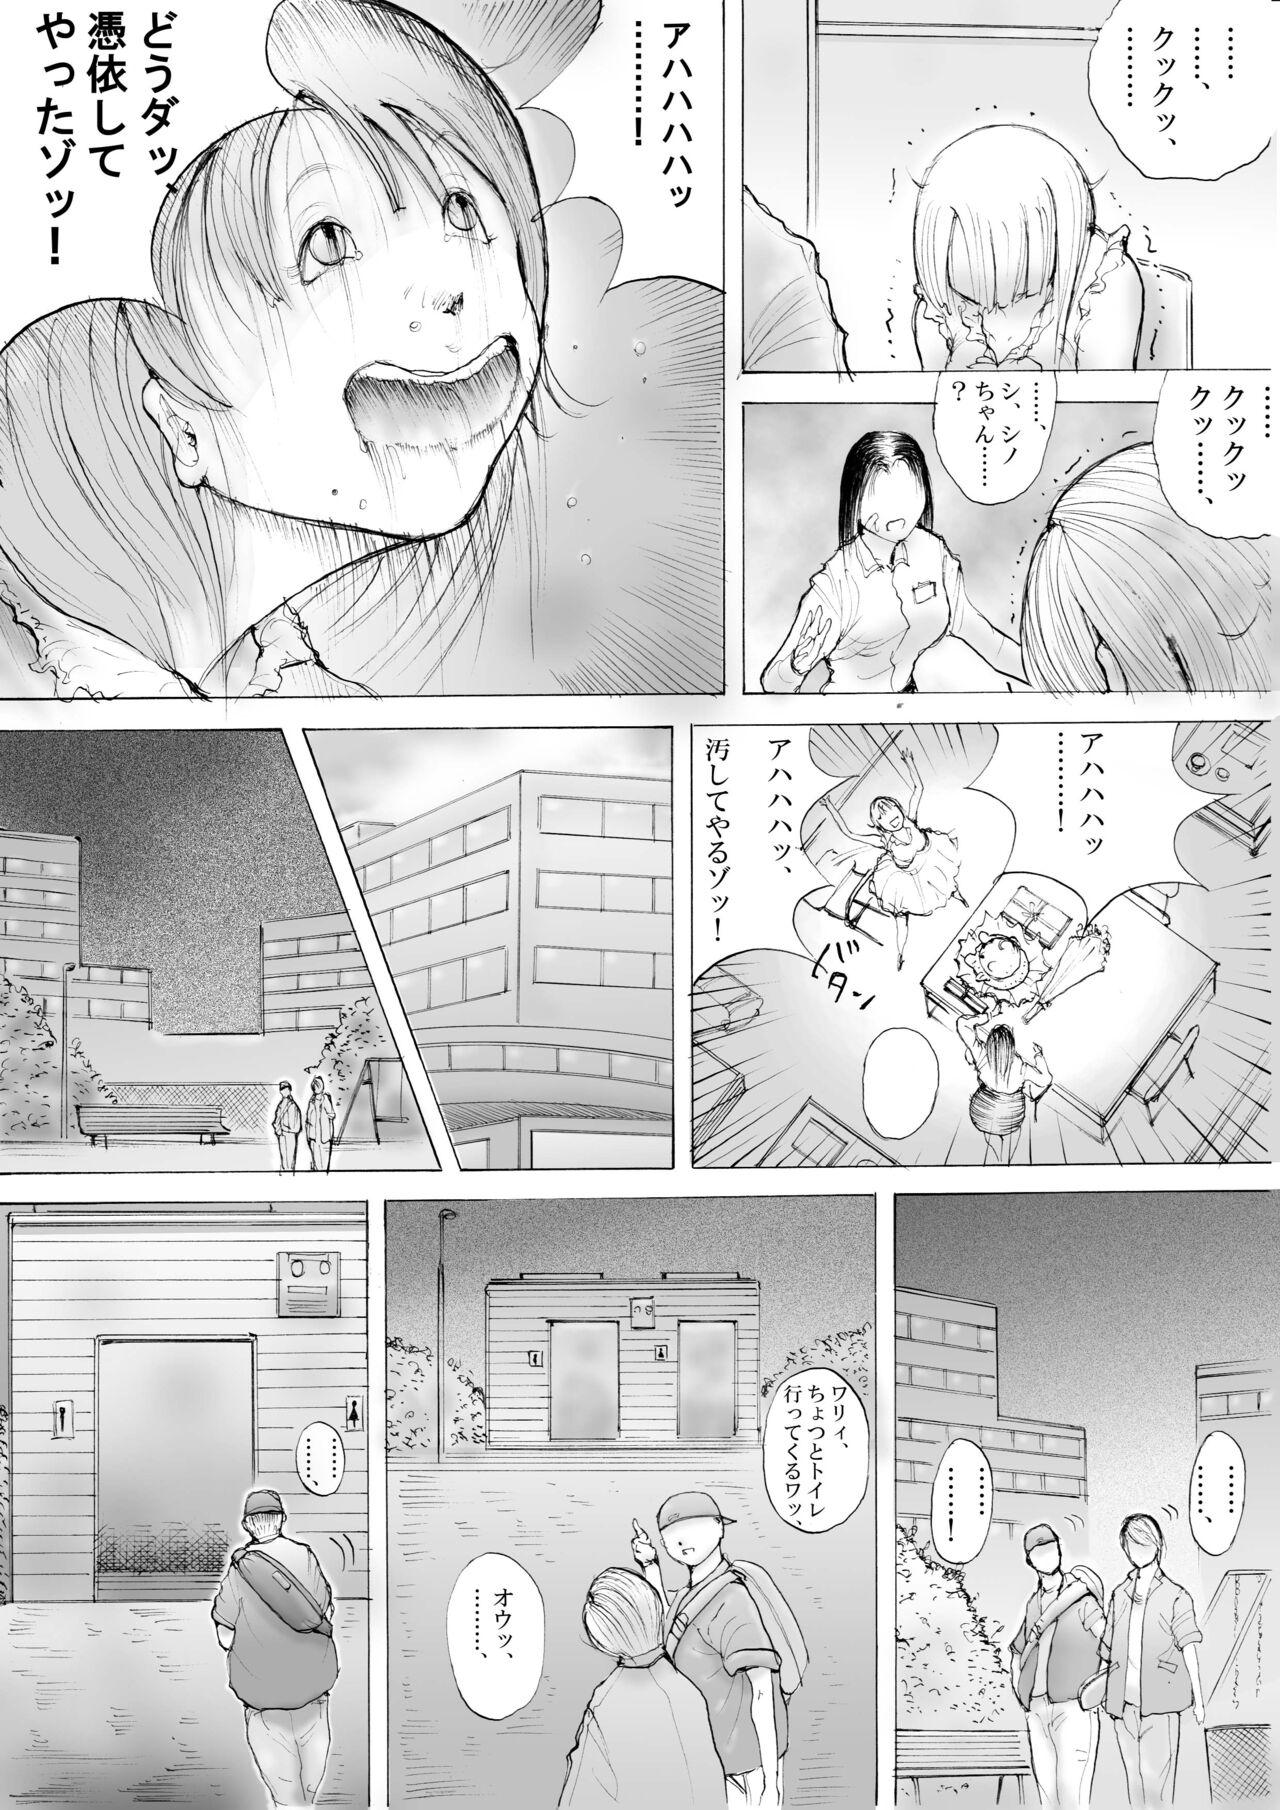 Horror Manga 10 4